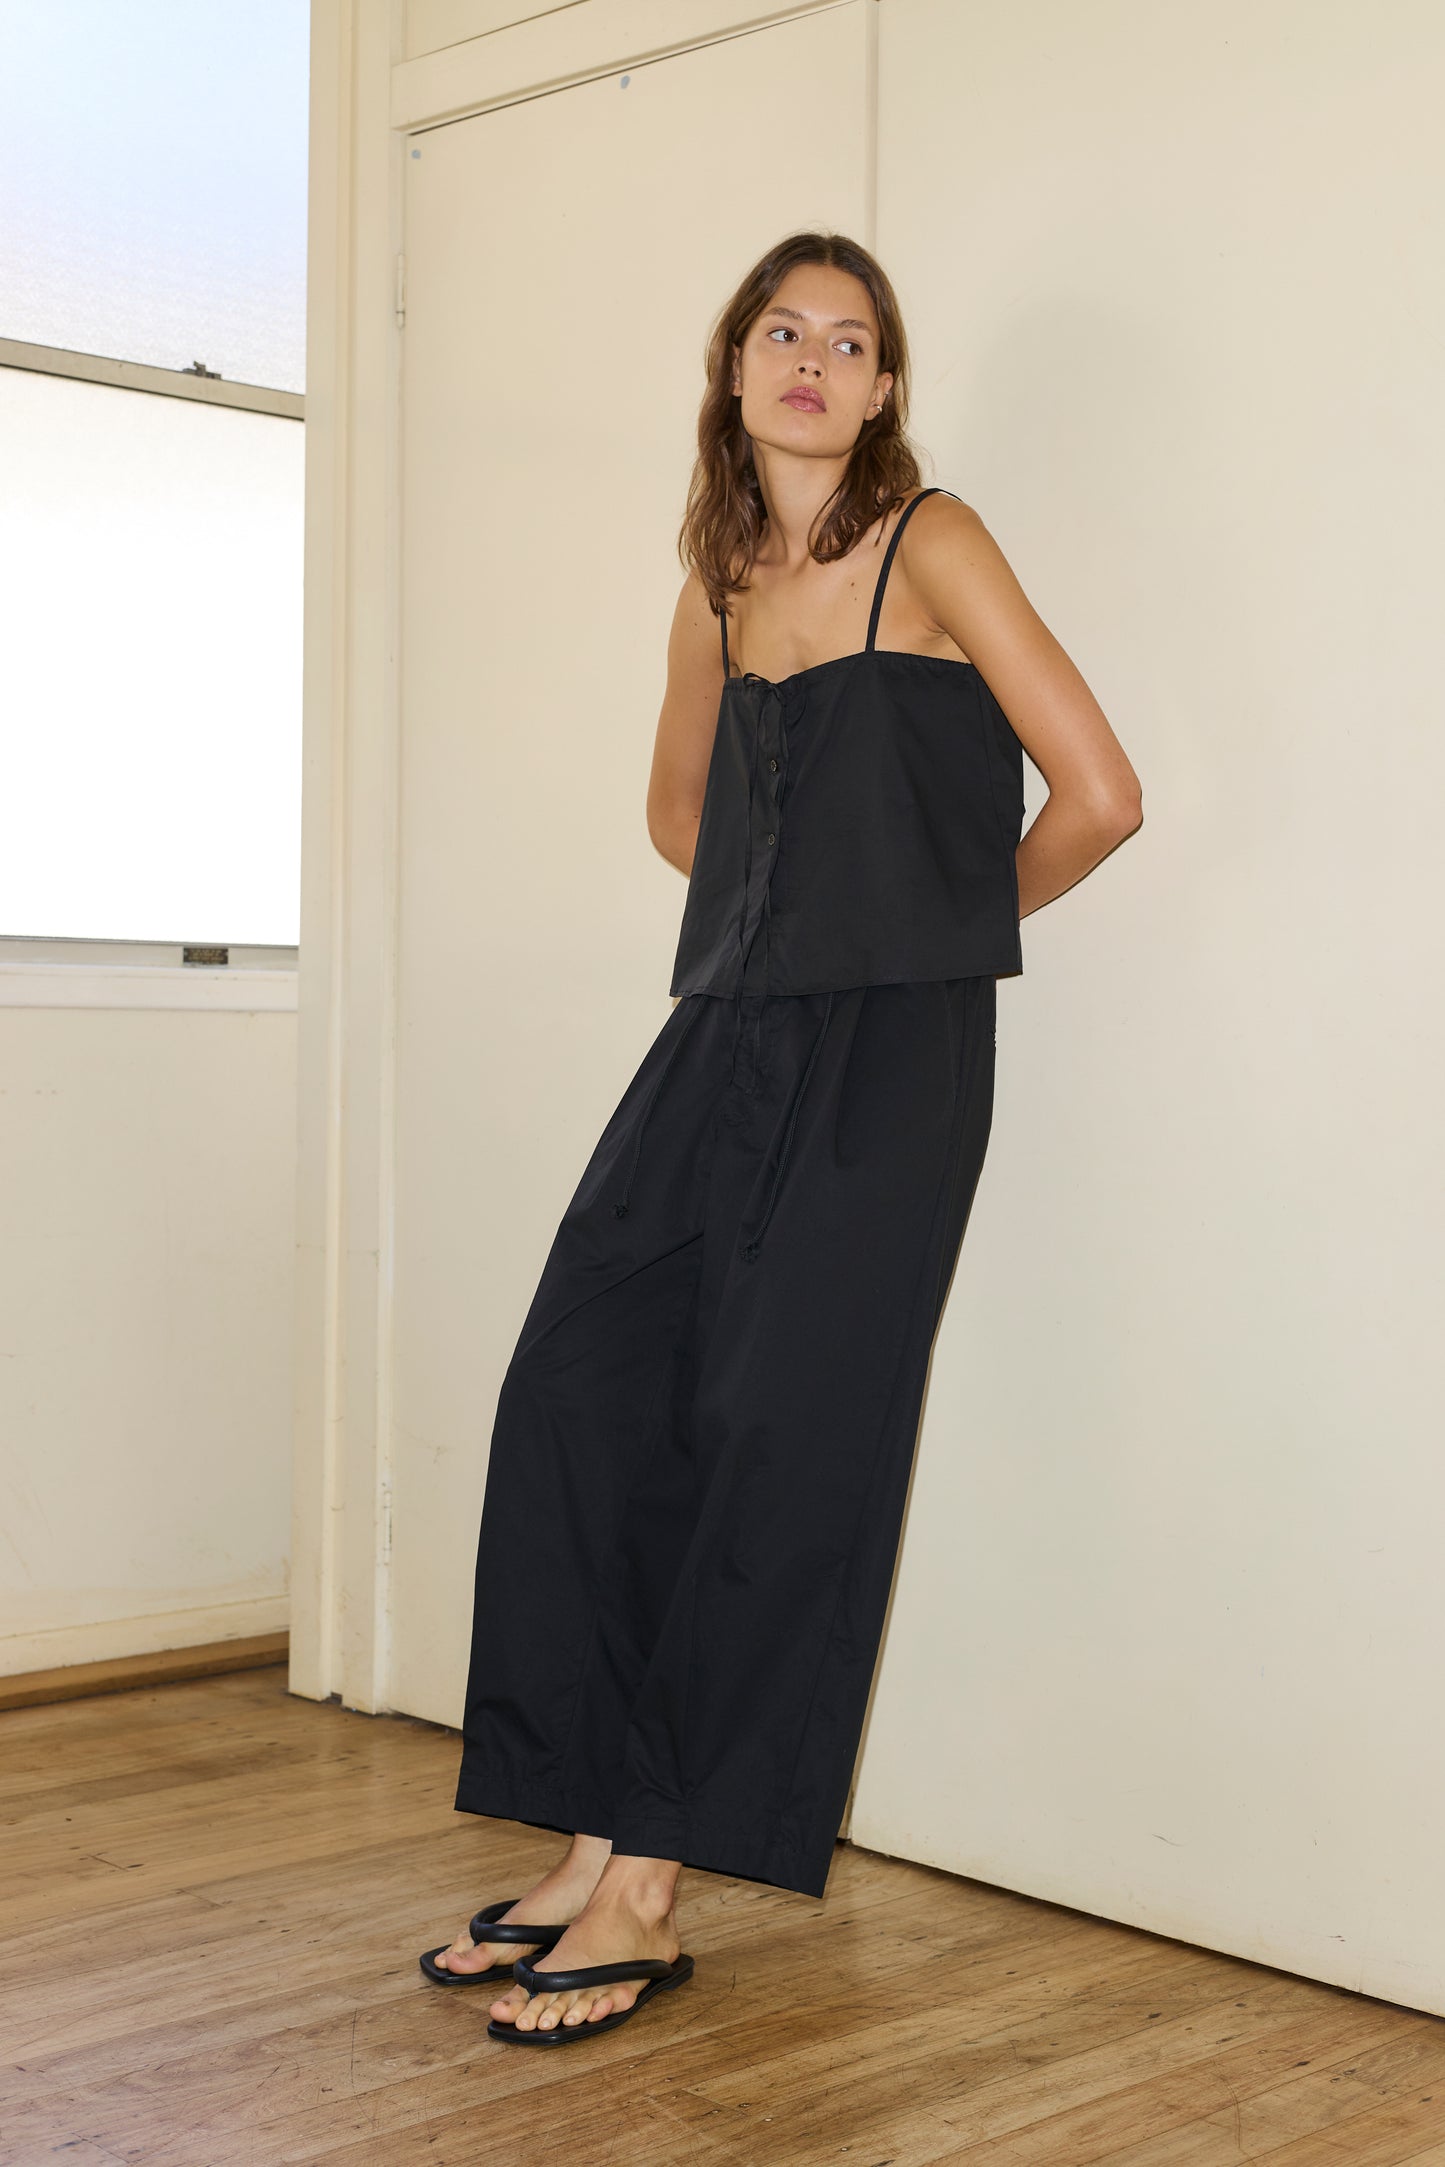 Female model wearing The Cotton Pant - Black by Deiji Studios against plain background